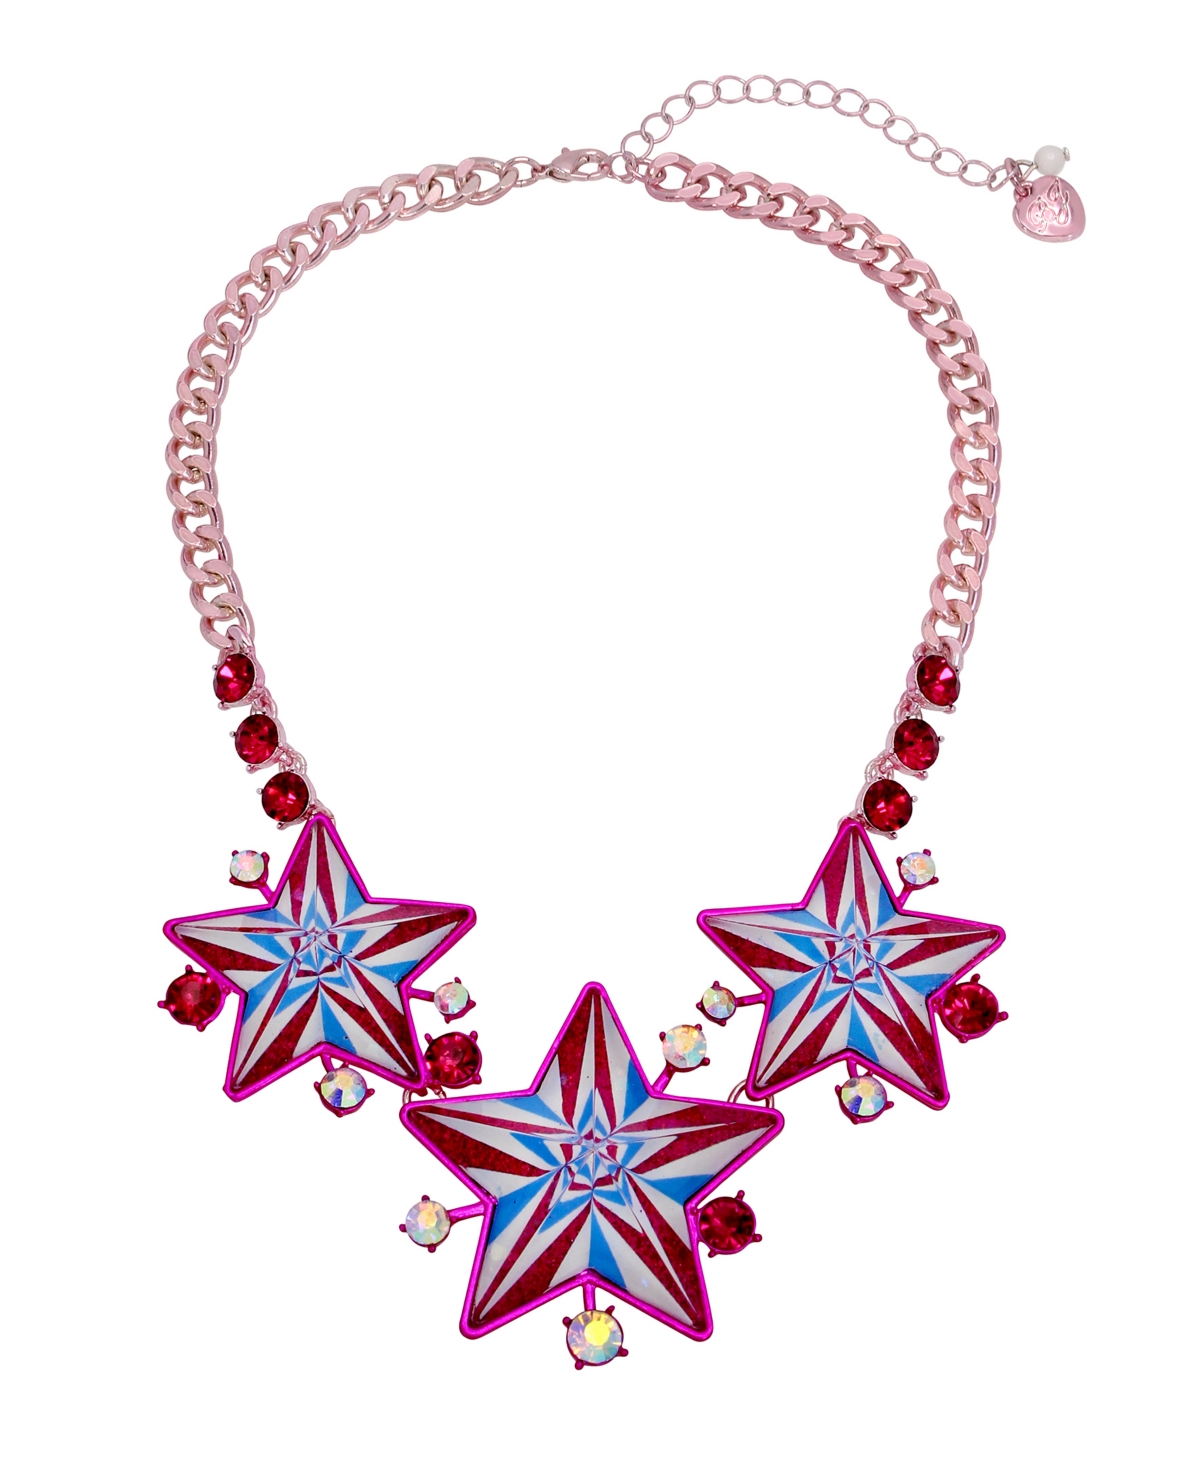 Faux Stone Festive Star Bib Necklace - Multi